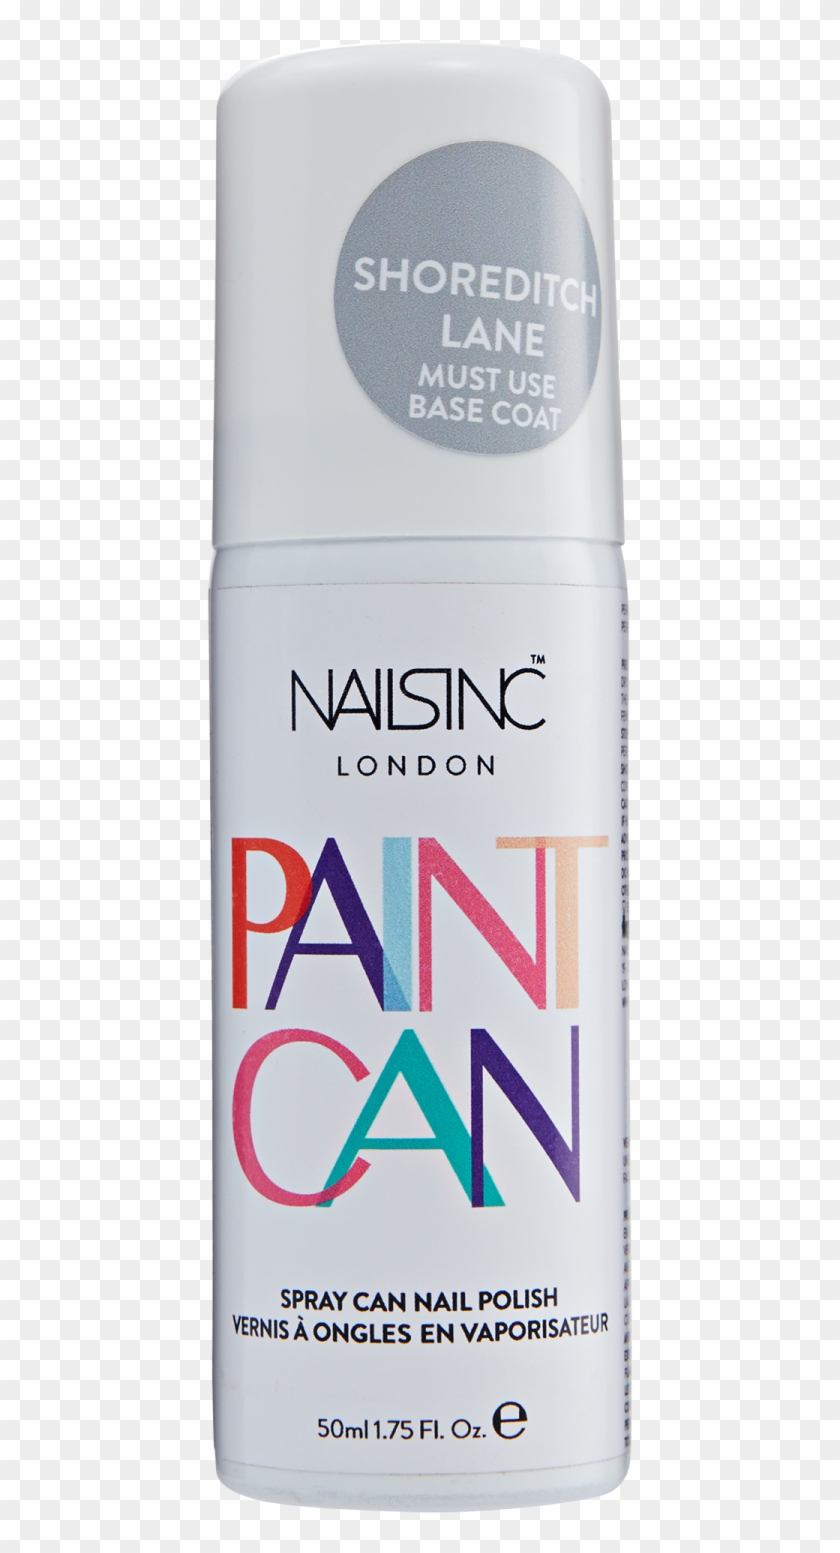 Shorteditch Lane Nail Spray Paint Can - Deodorant Clipart #1989170